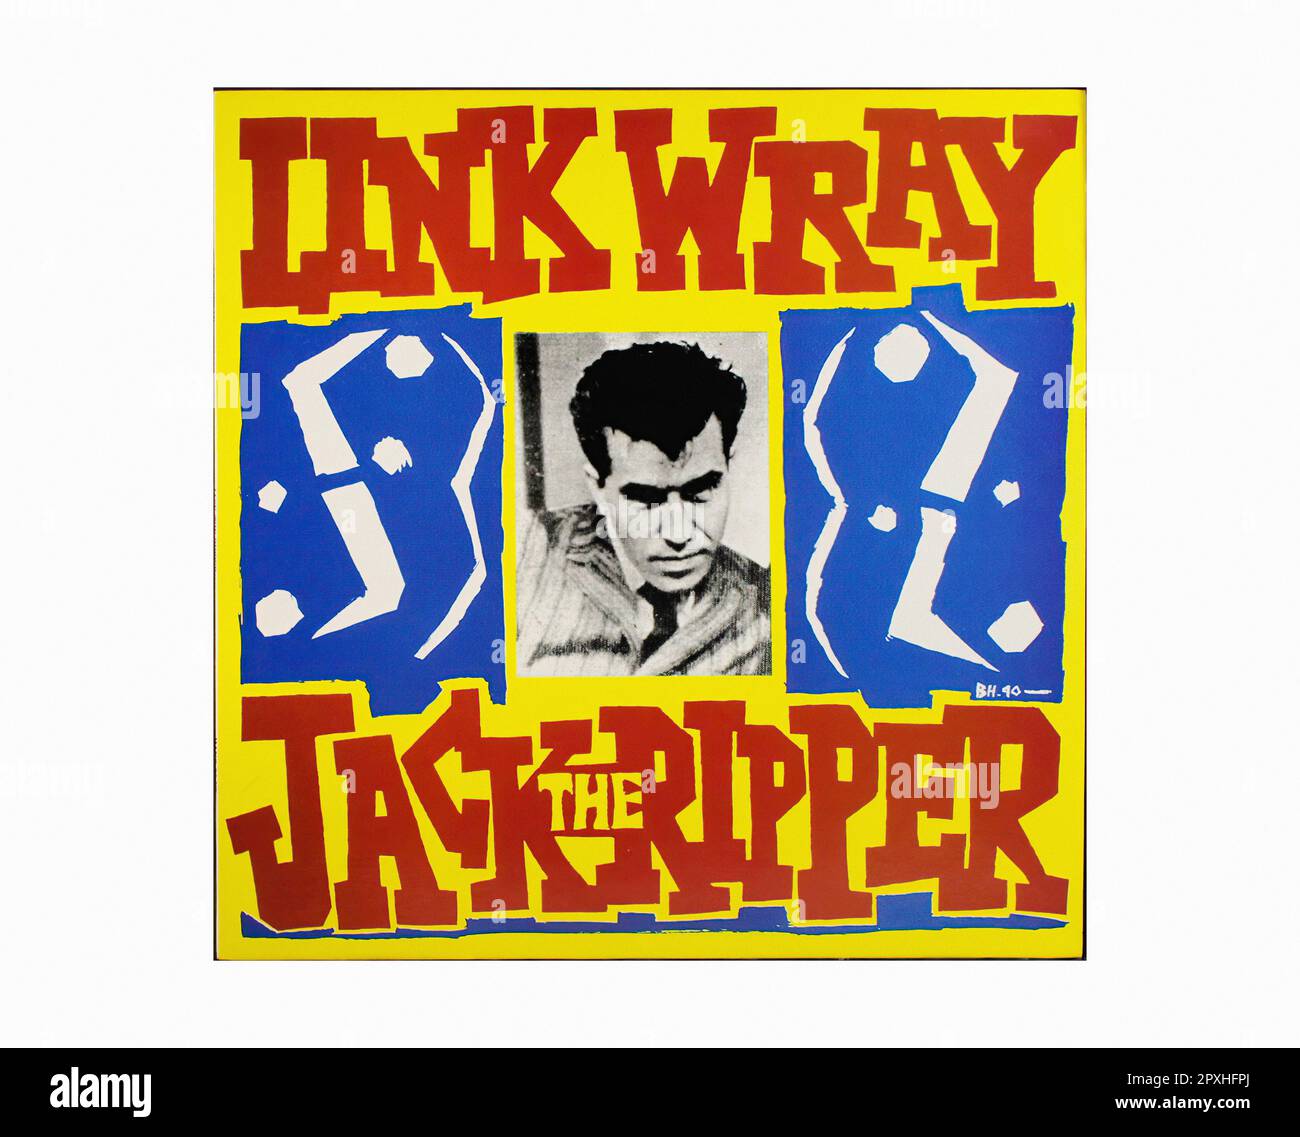 Link Wray - Jack The Ripper (1990) - Vintage Vinyl Record Sleeve Stock Photo